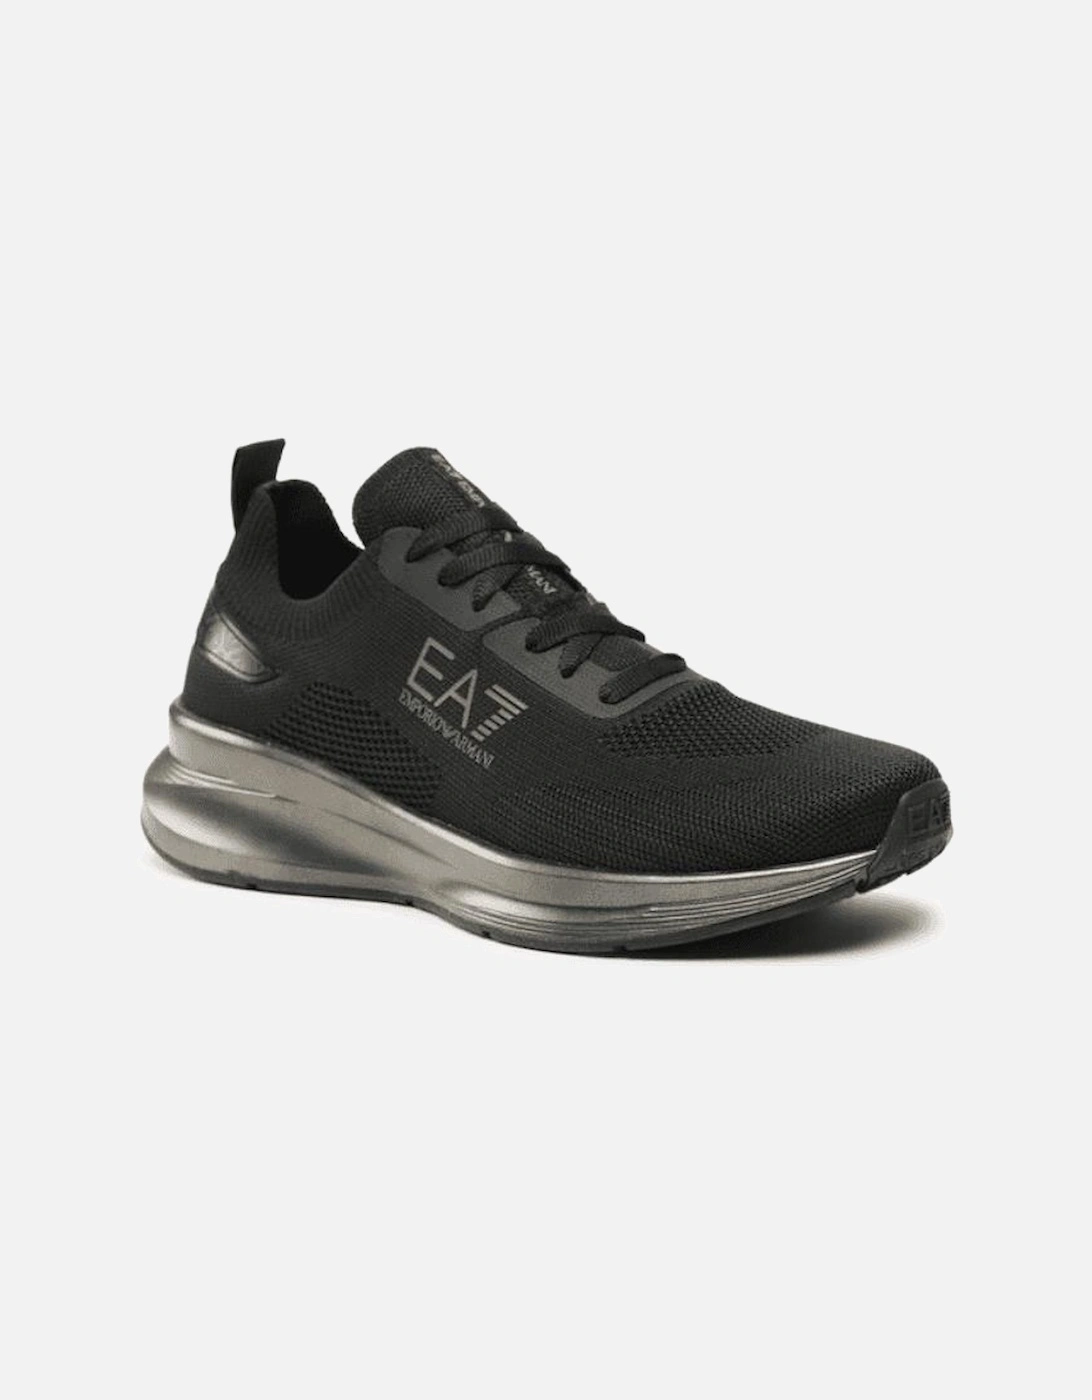 Black/Silver Breathable Mesh Sneaker Trainer